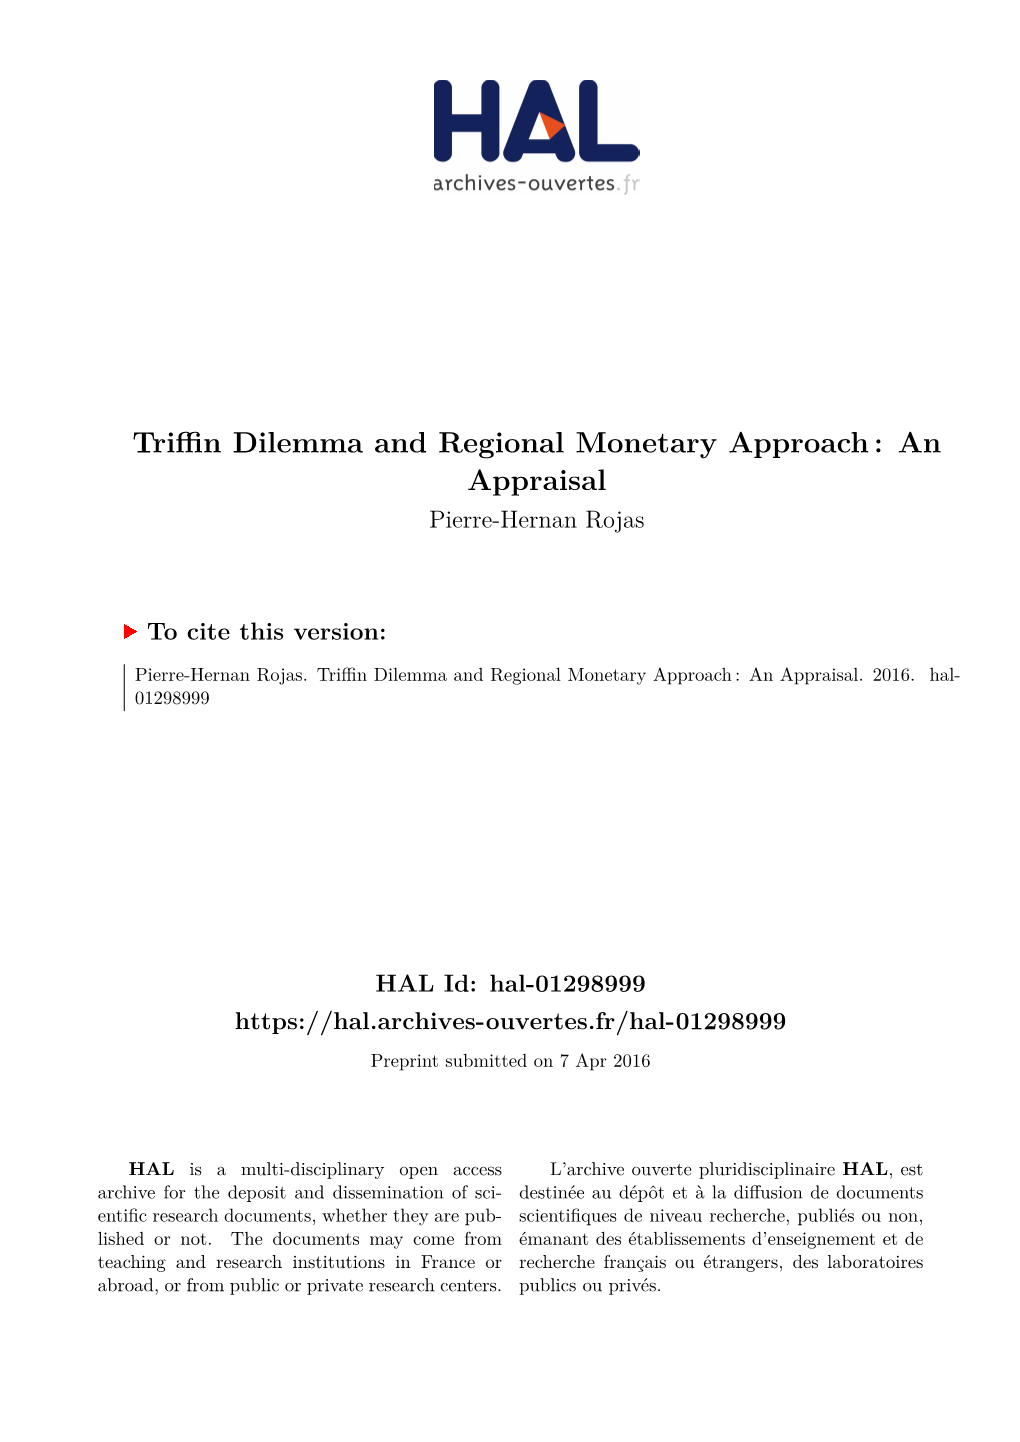 Triffin Dilemma and Regional Monetary Approach: an Appraisal